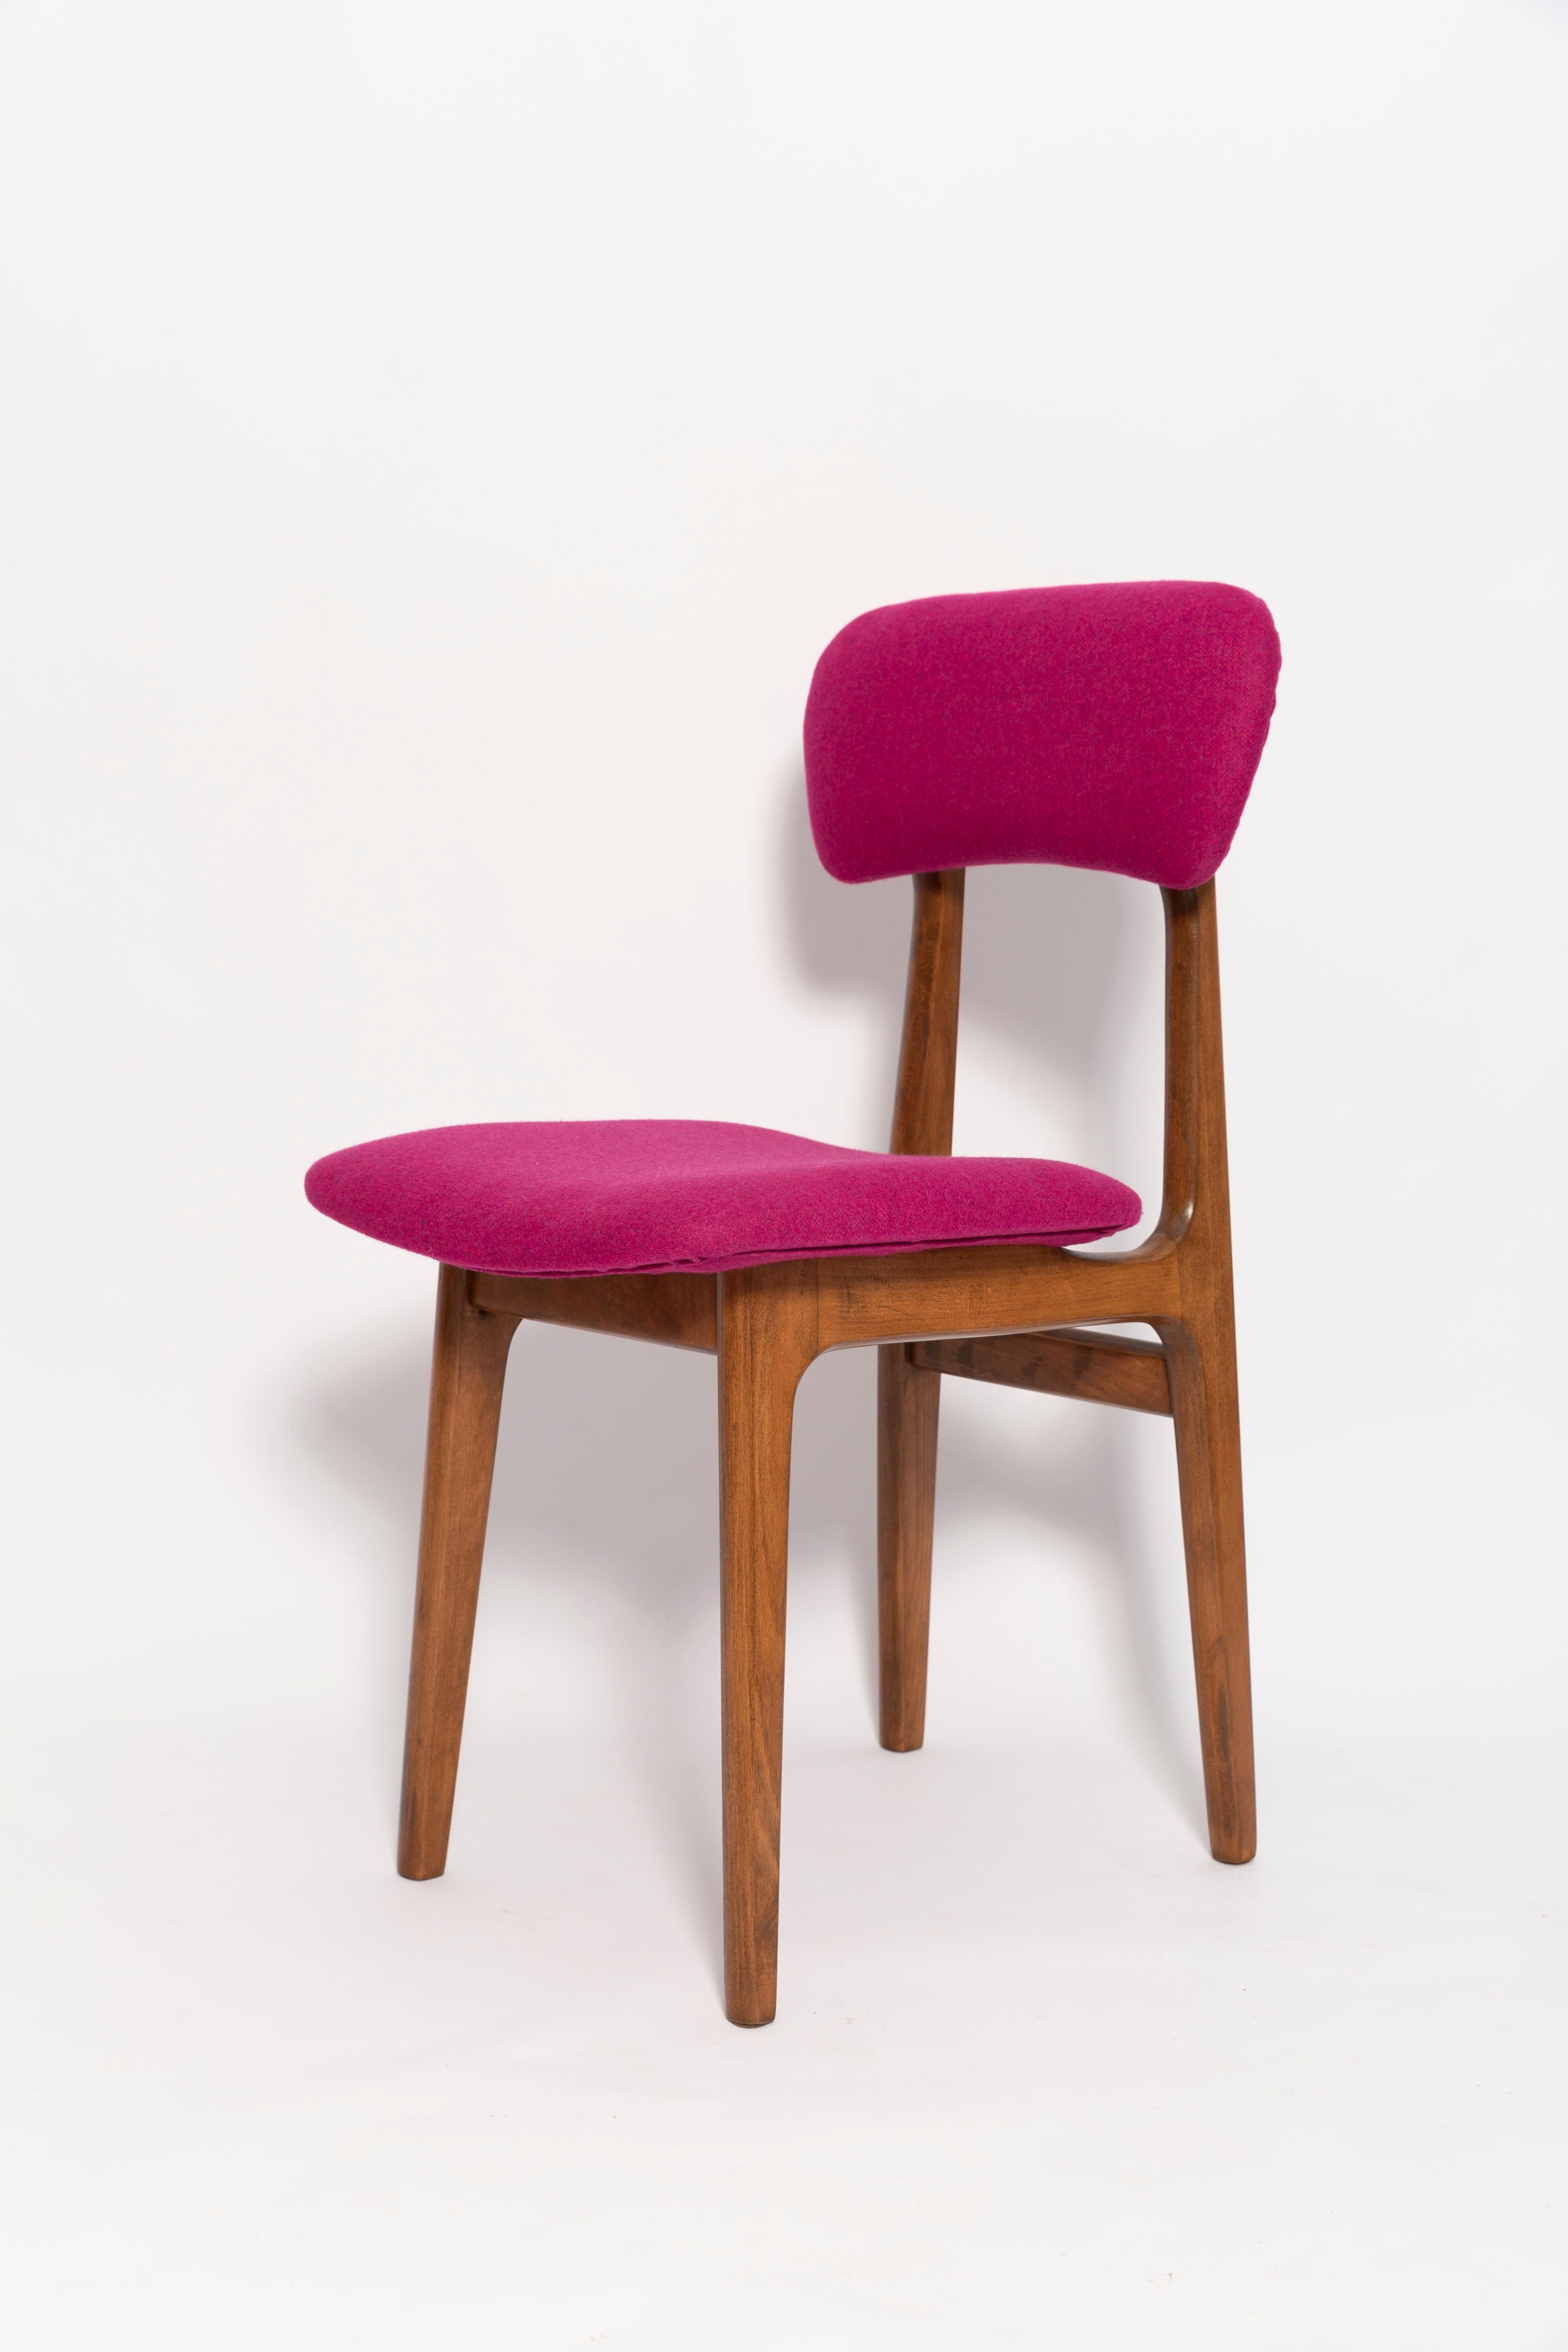 Mid Century Fuchsia Pink Wool Chair, Walnut Wood, Rajmund Halas, Europe, 1960s For Sale 1